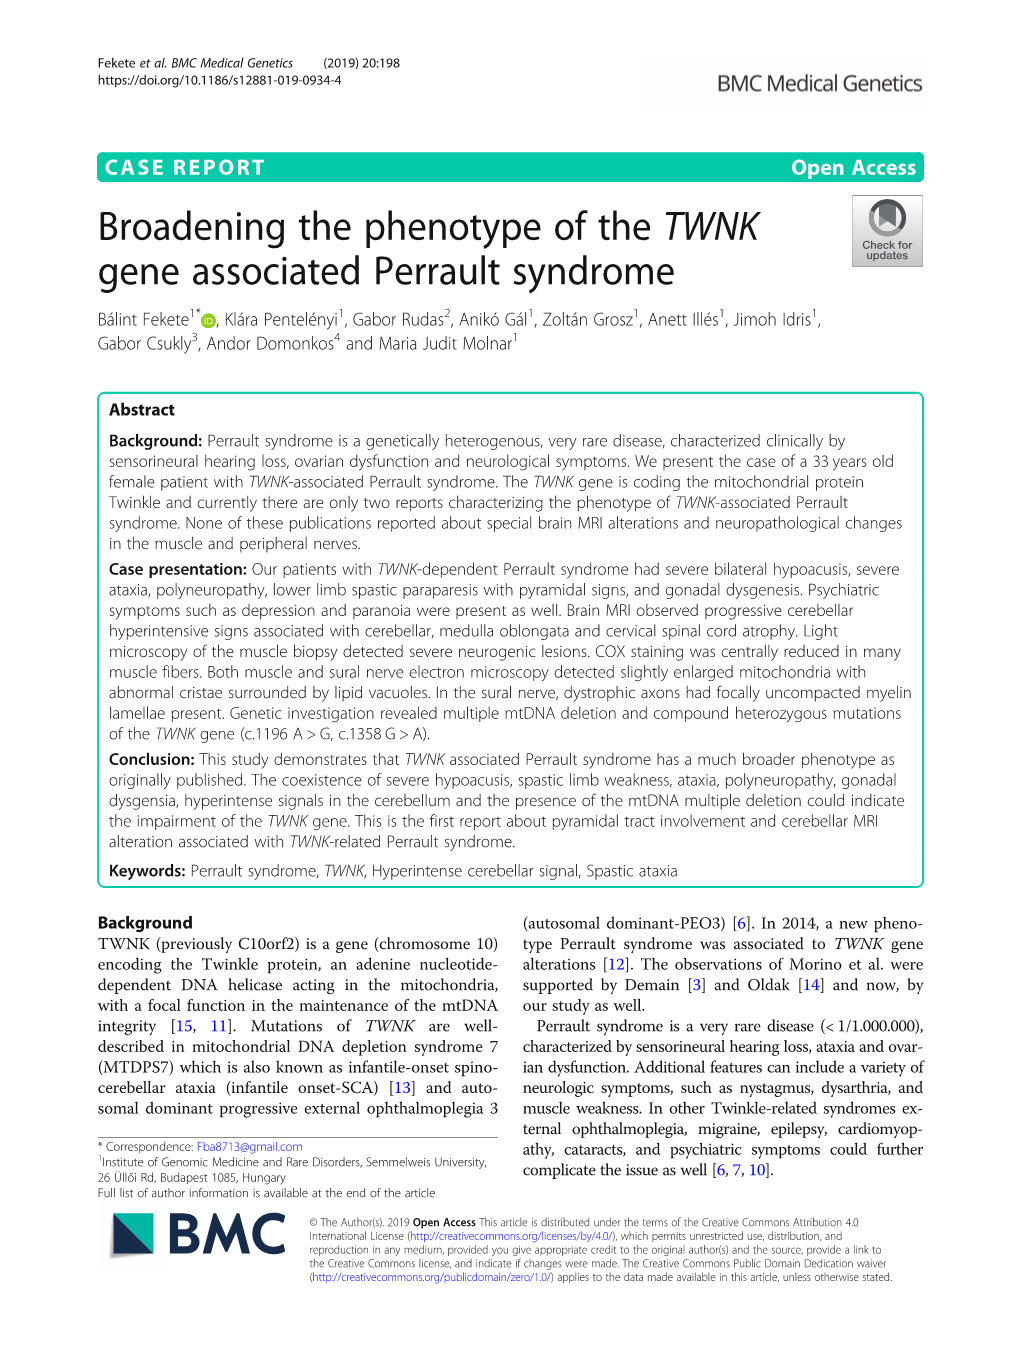 Broadening the Phenotype of the TWNK Gene Associated Perrault